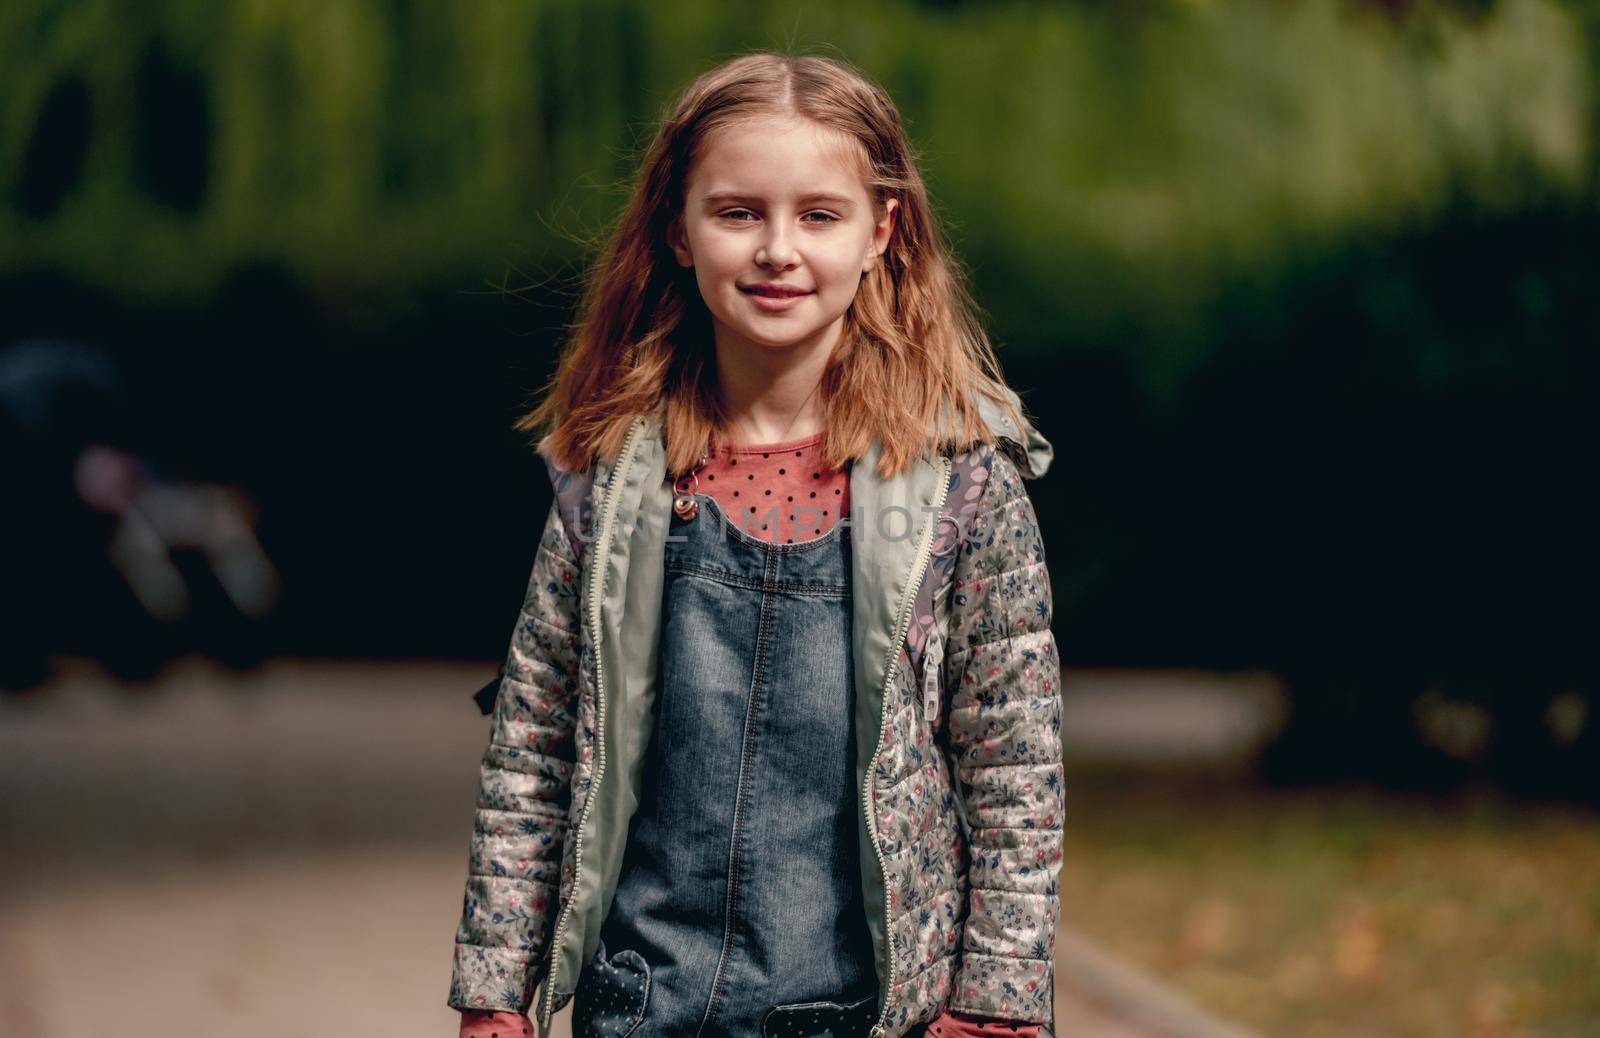 Pretty school girl in autumn park portrait. Beautiful primary school female pupil kid outdoors